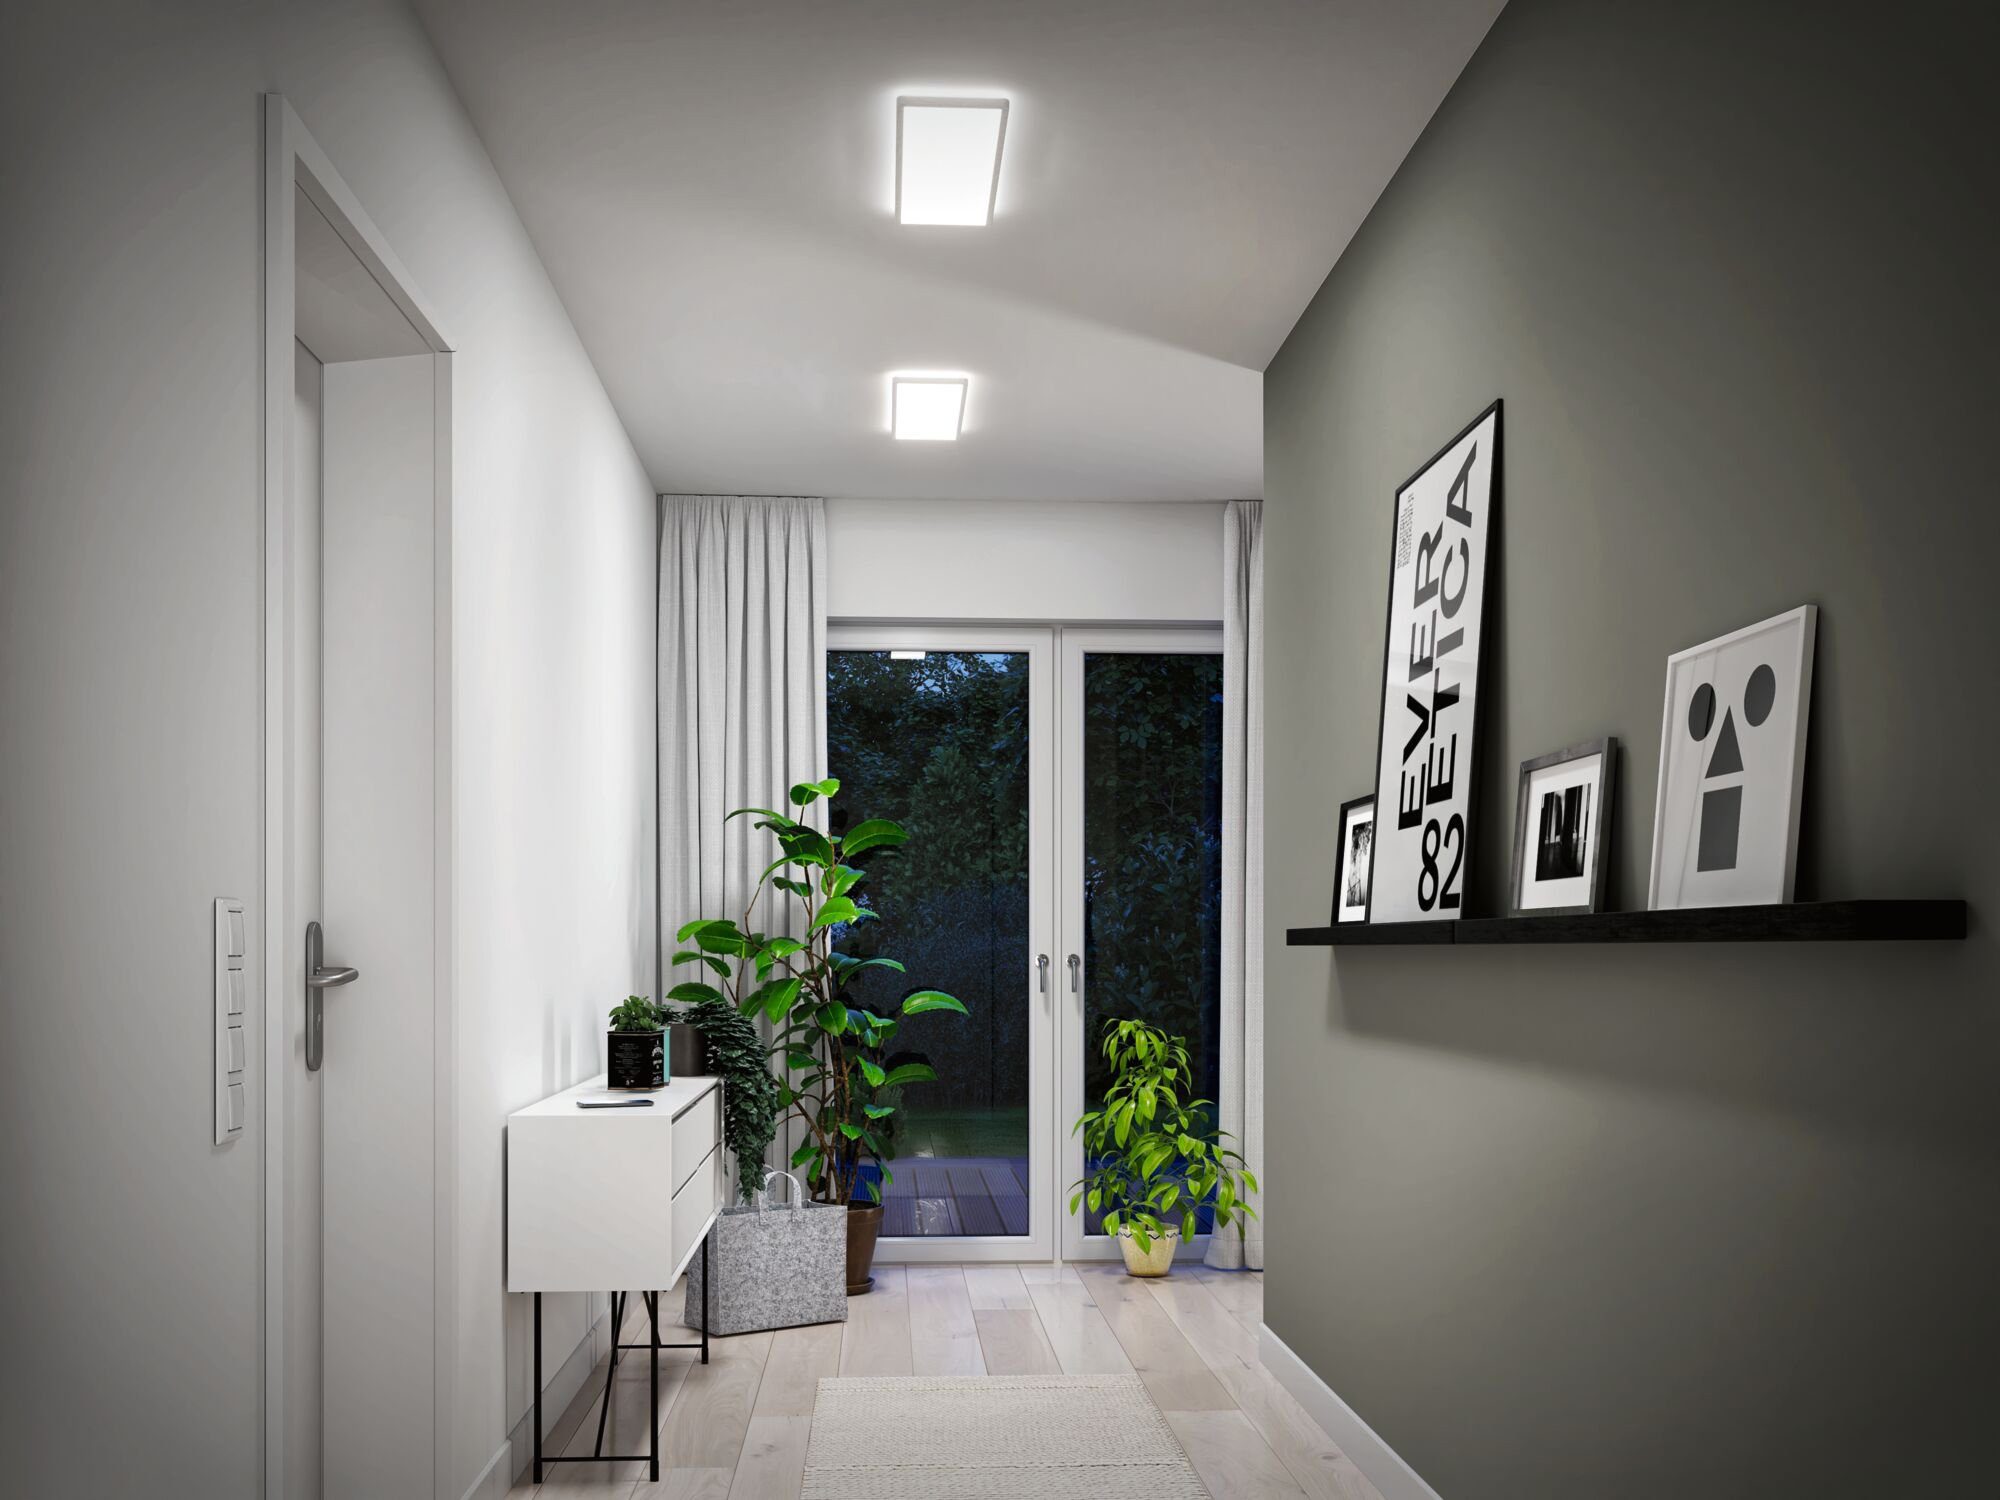 LED Atria Panel Tageslichtweiß Paulmann fest integriert, Shine, LED